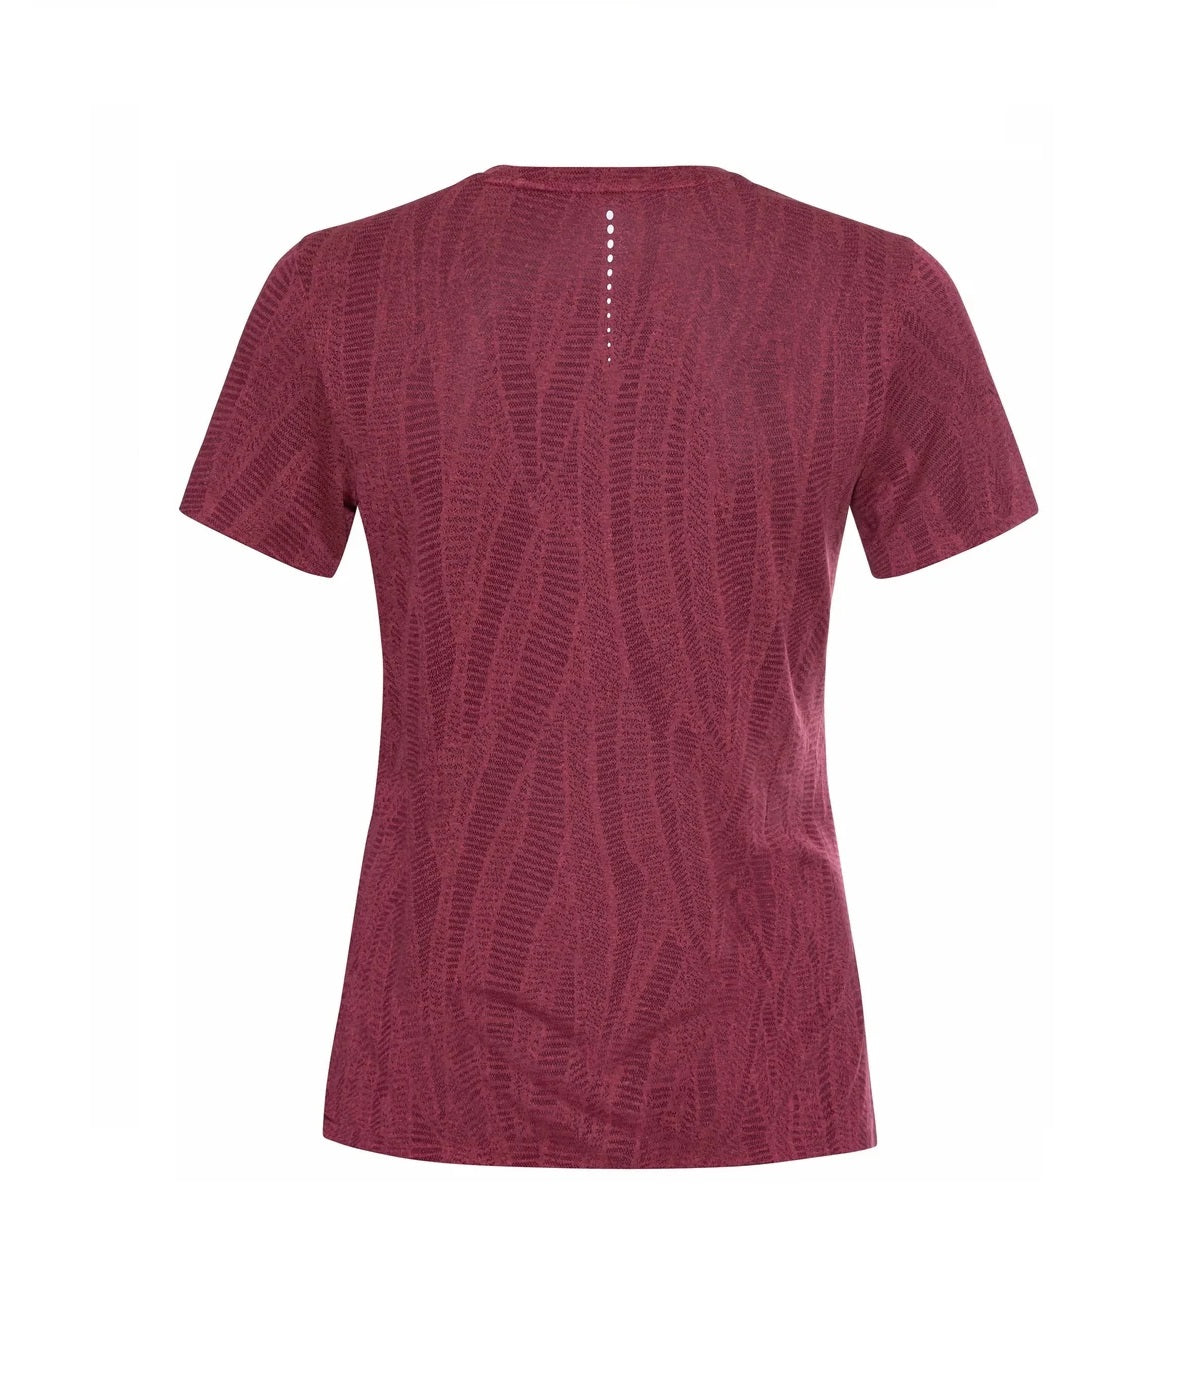 T-Shirt de Running Odlo Zeroweight Engineered Chill-Tec Manches Courtes Femme Bordeaux, vue de dos